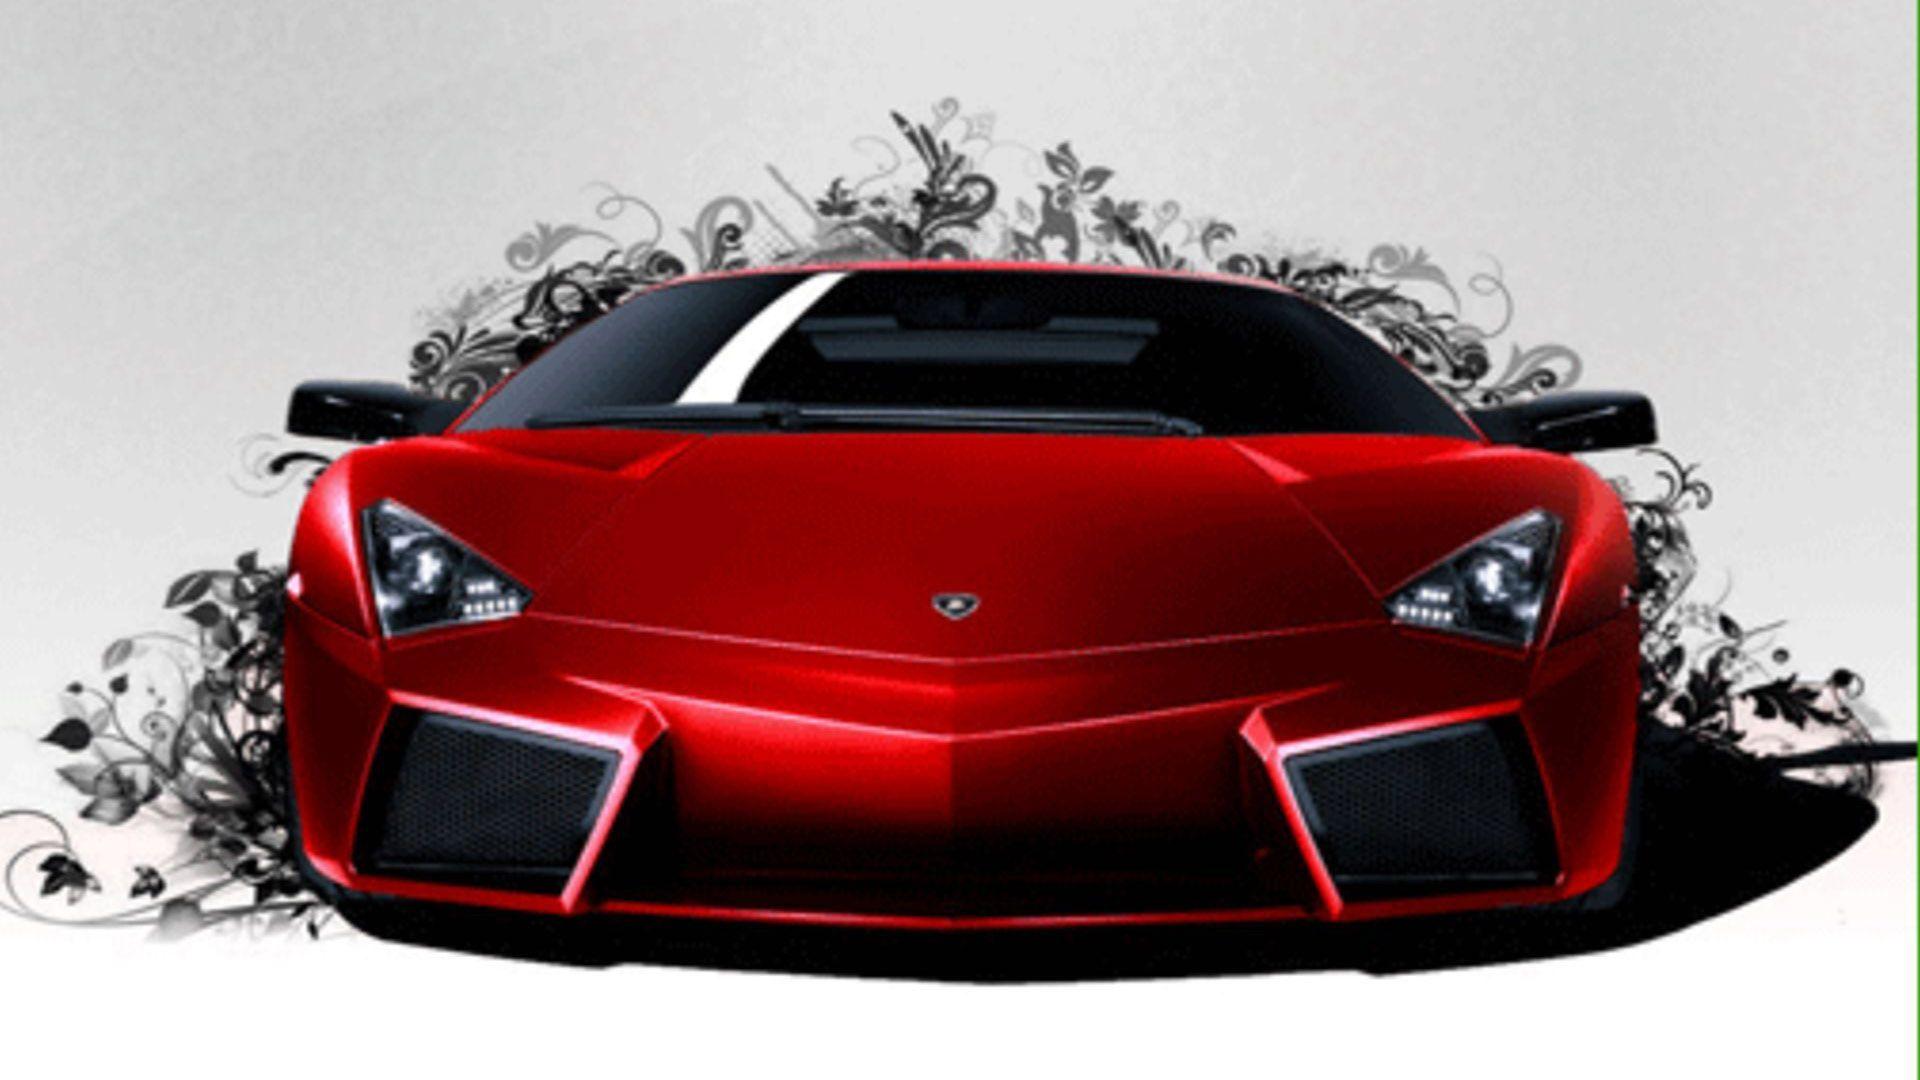 Red Lamborghini Wallpaper 6442 HD Wallpaper. Cars Background